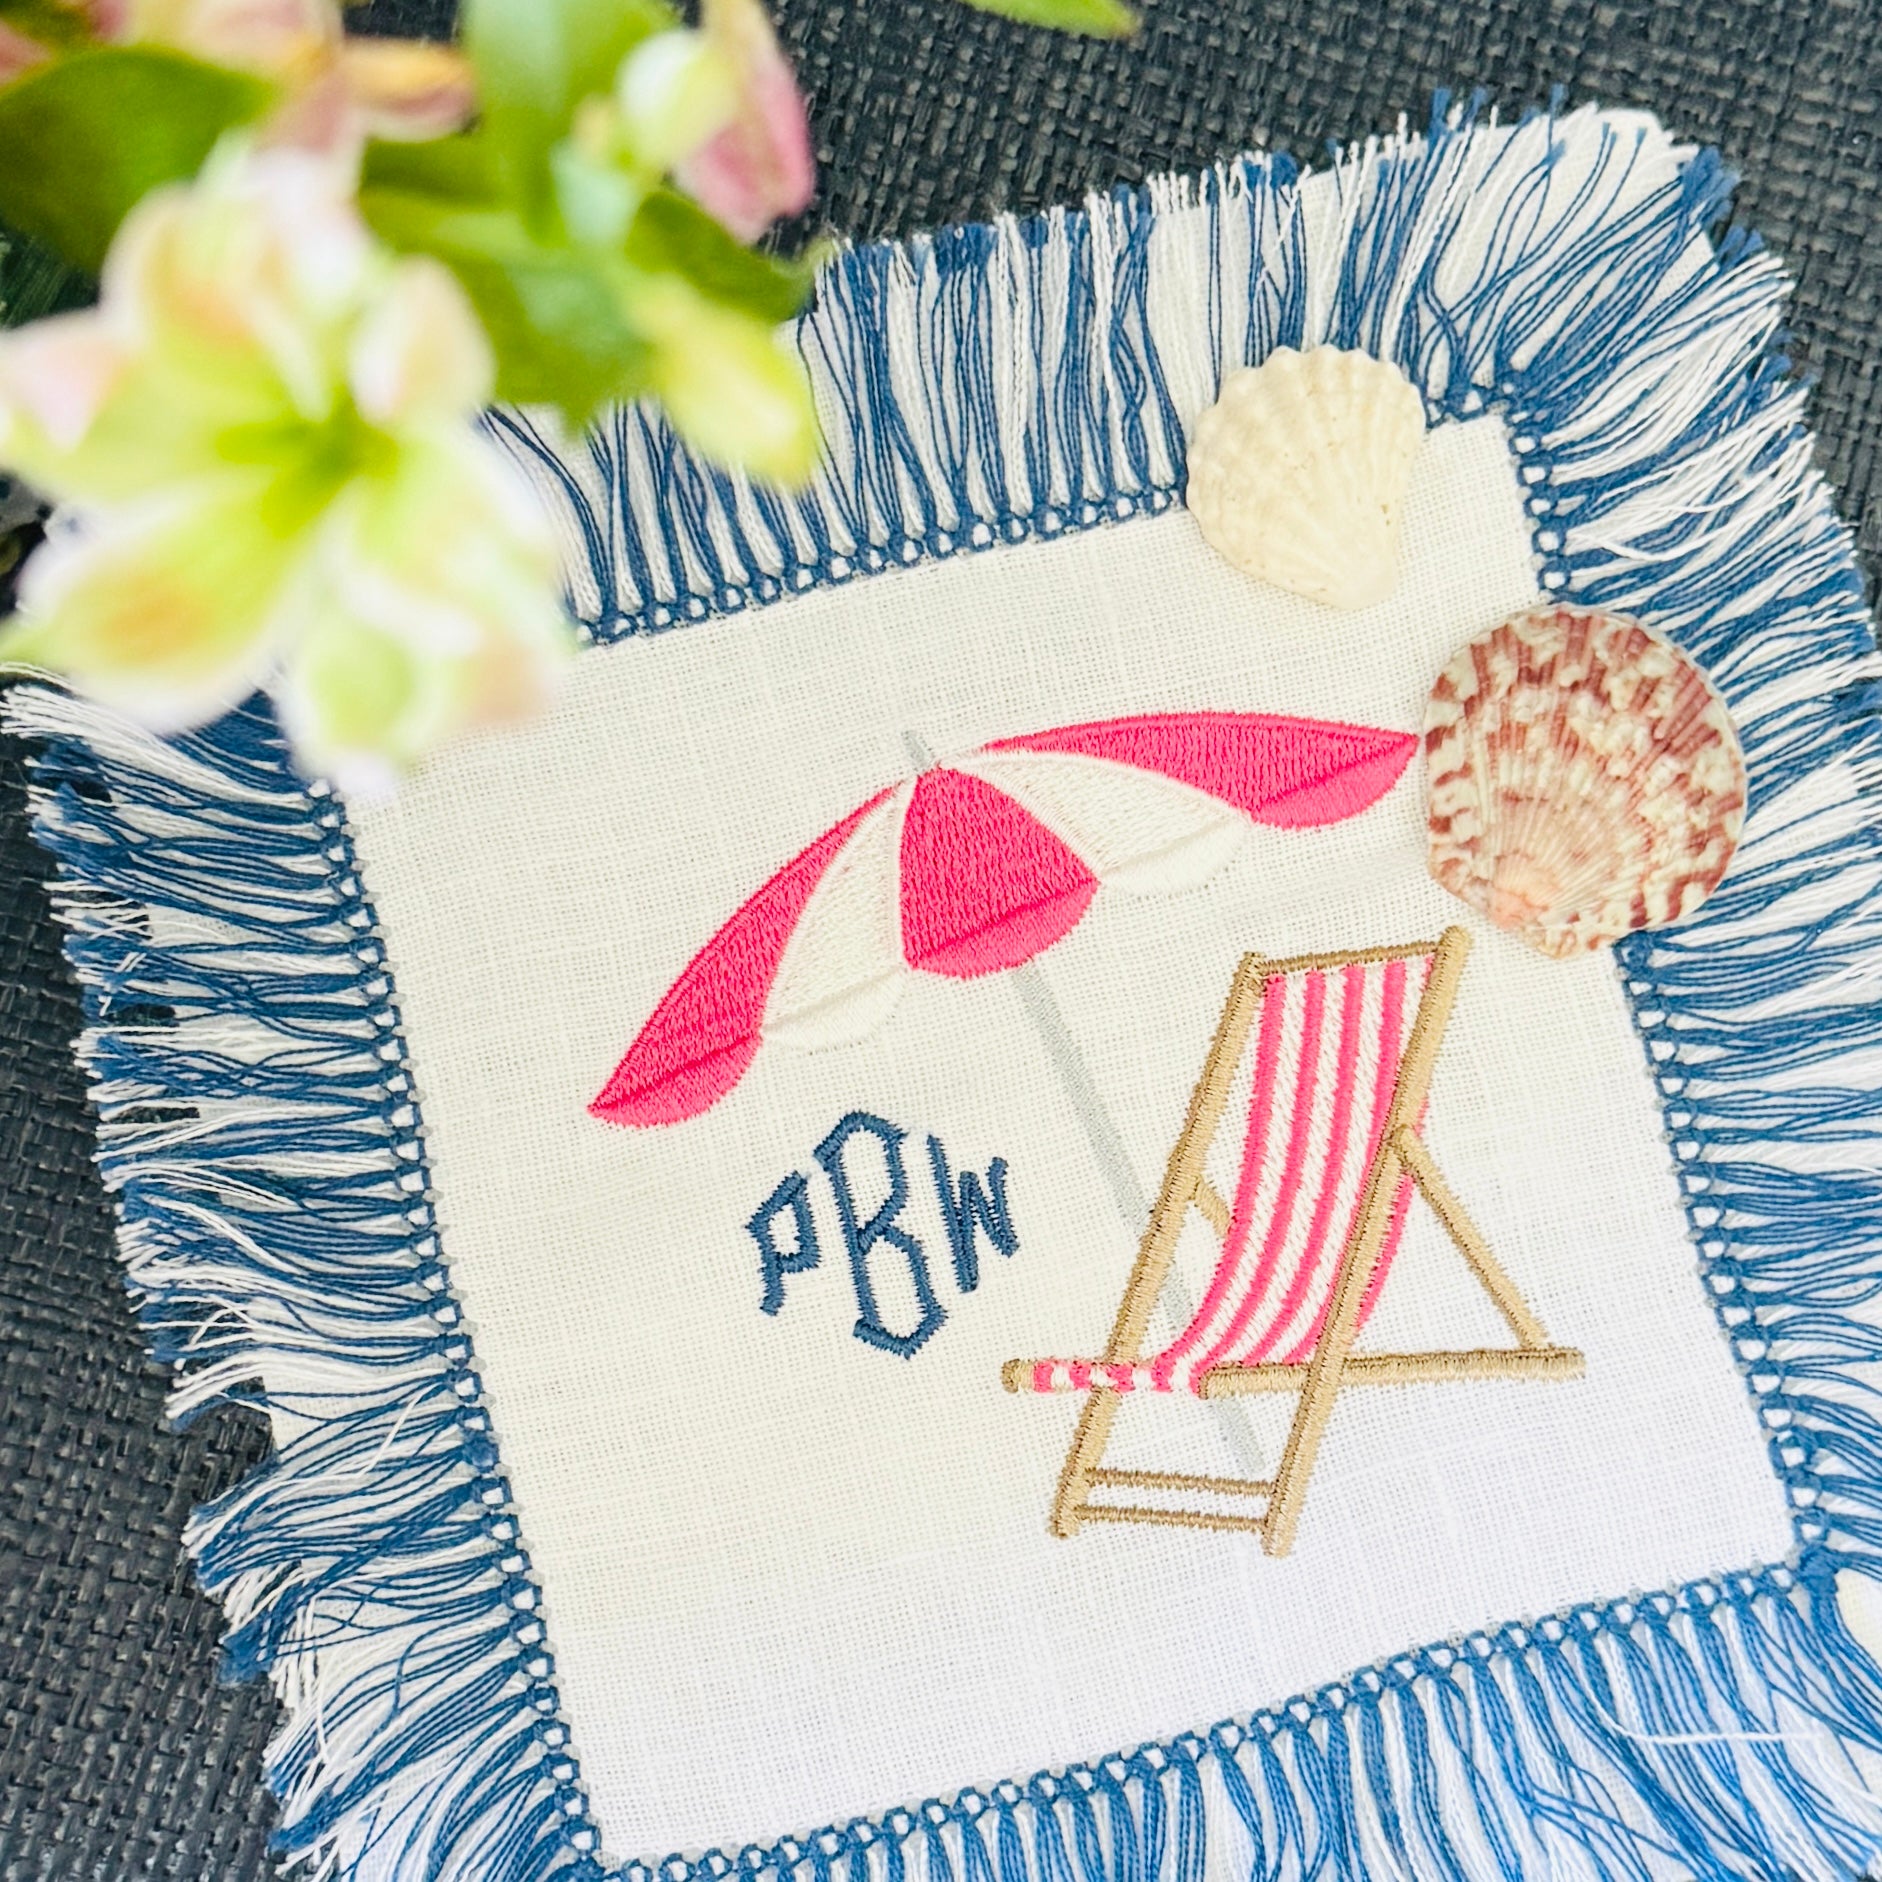 Beach Club Embroidery Design